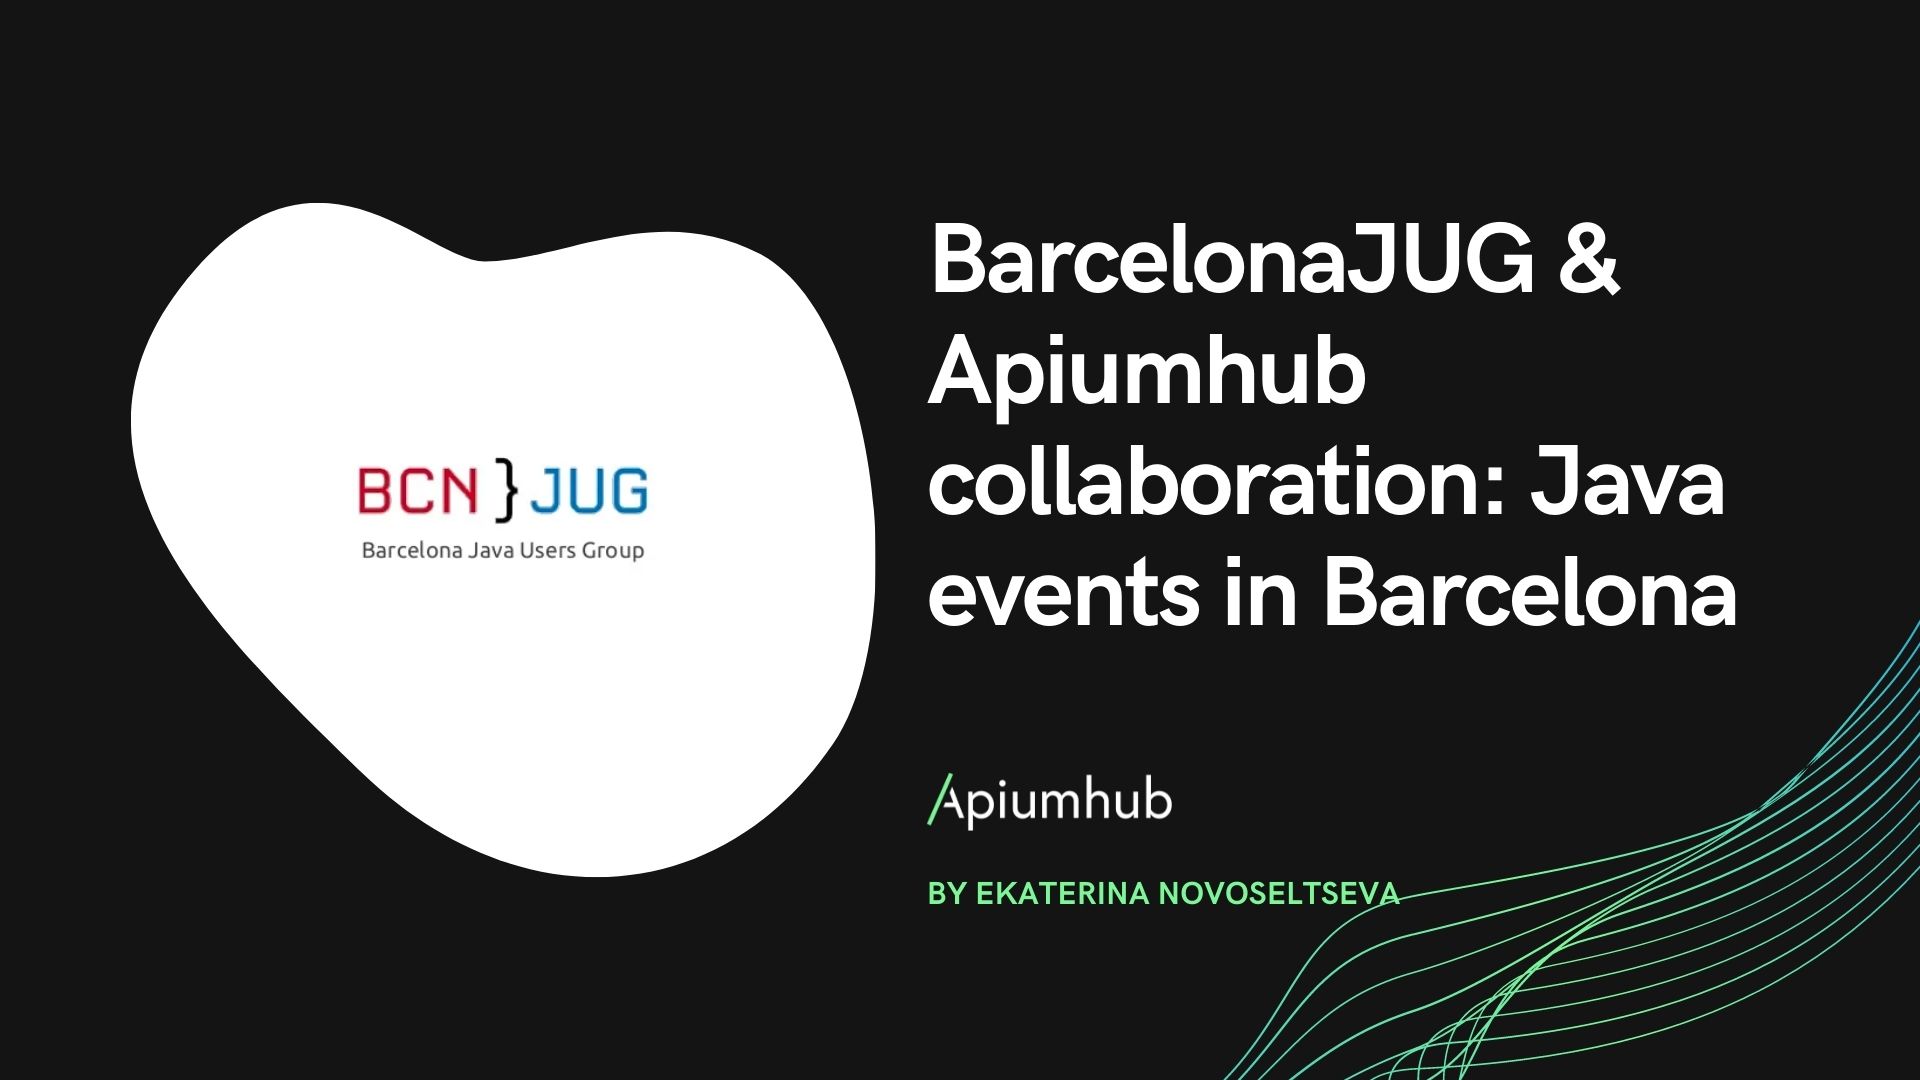 BarcelonaJUG & Apiumhub collaboration: Java events in Barcelona